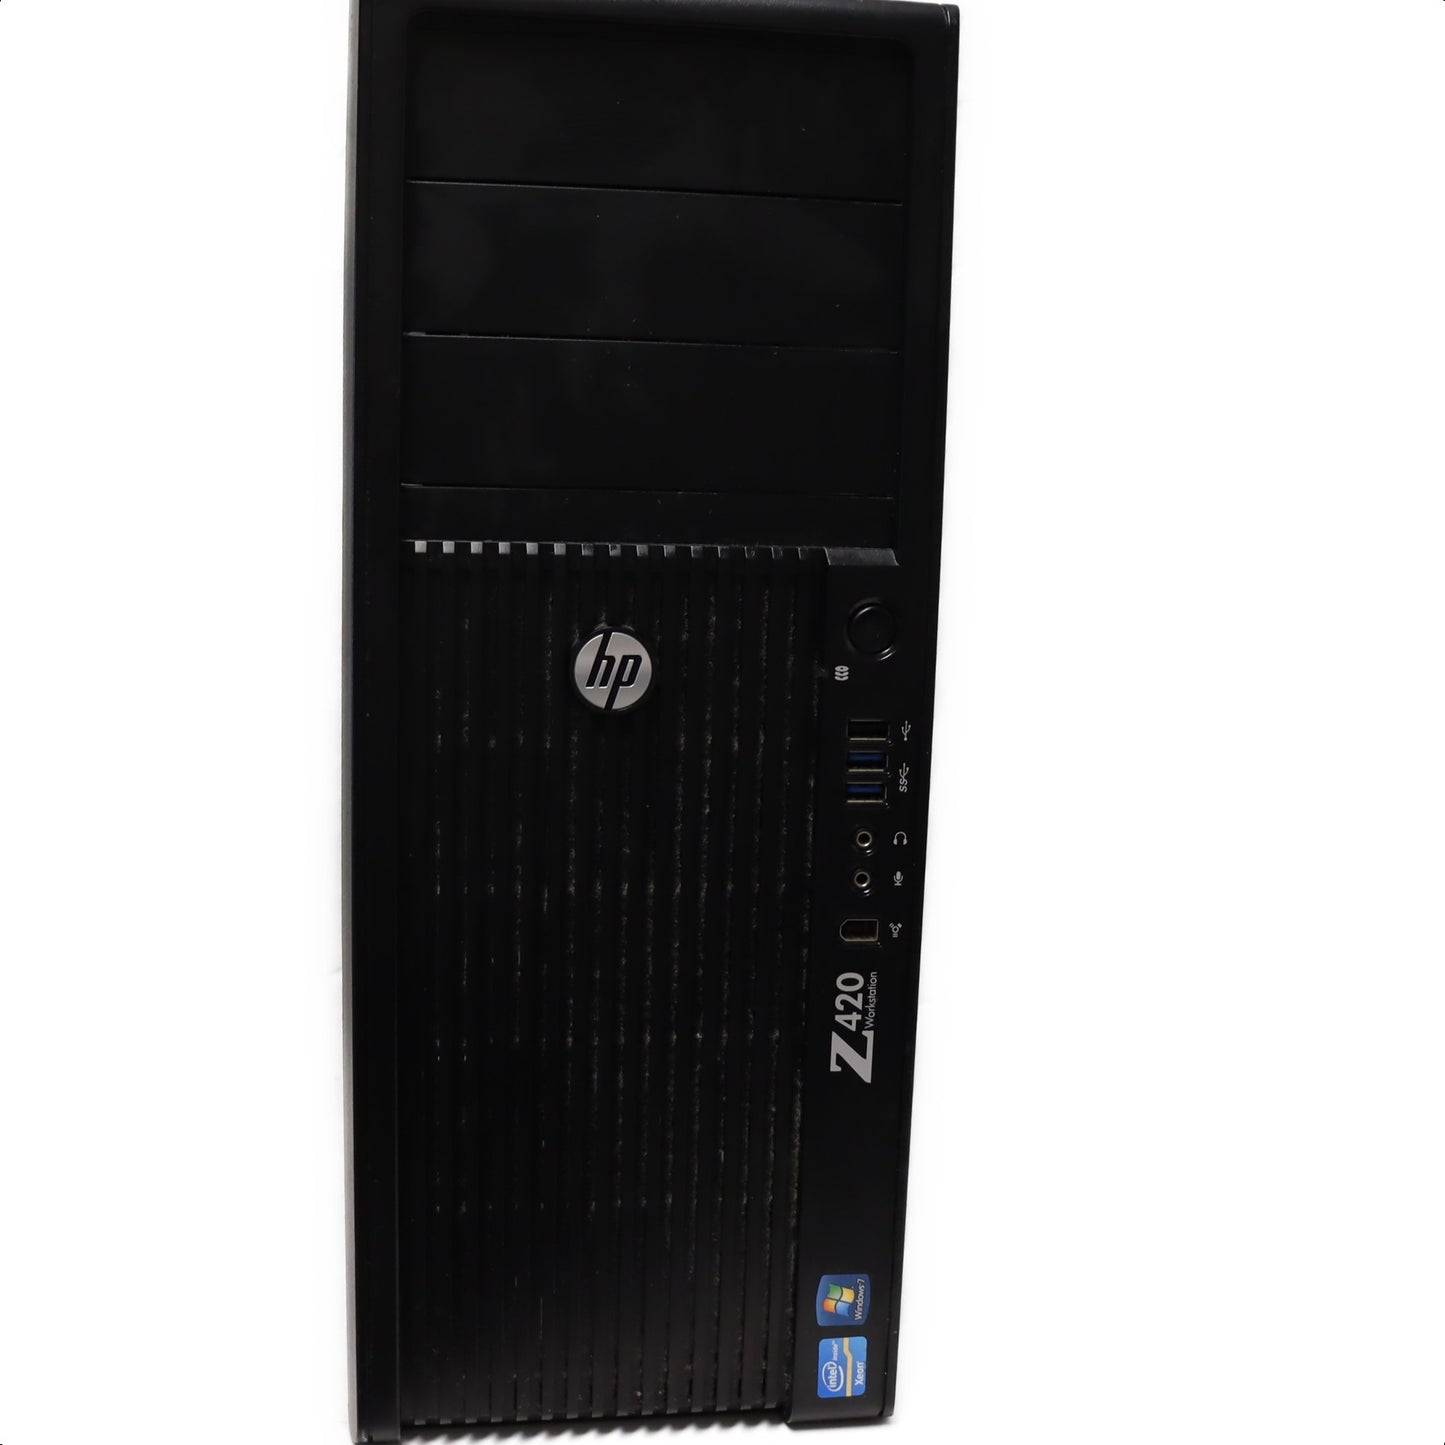 PC HP Z420 Xeon E5-1603 2.8 GHz 16 GB RAM 128GB SSD AMD 8490 1 GB